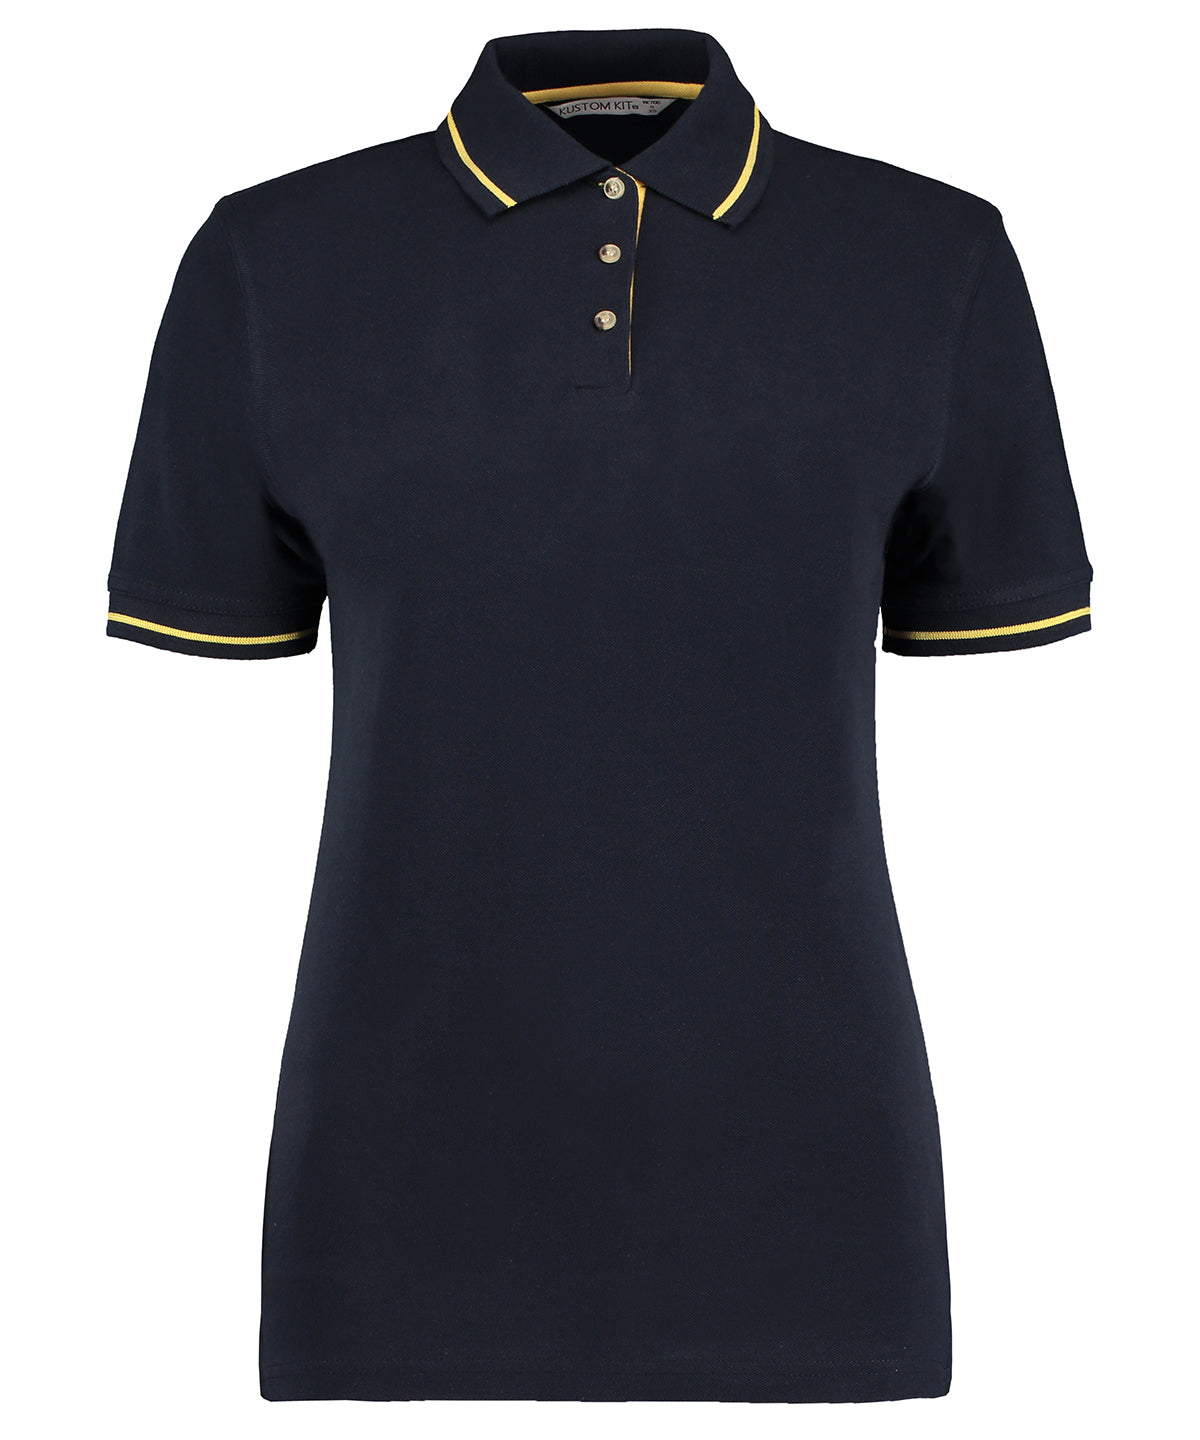 Personalised Polo Shirts - Navy Kustom Kit Women's St Mellion polo (classic fit)